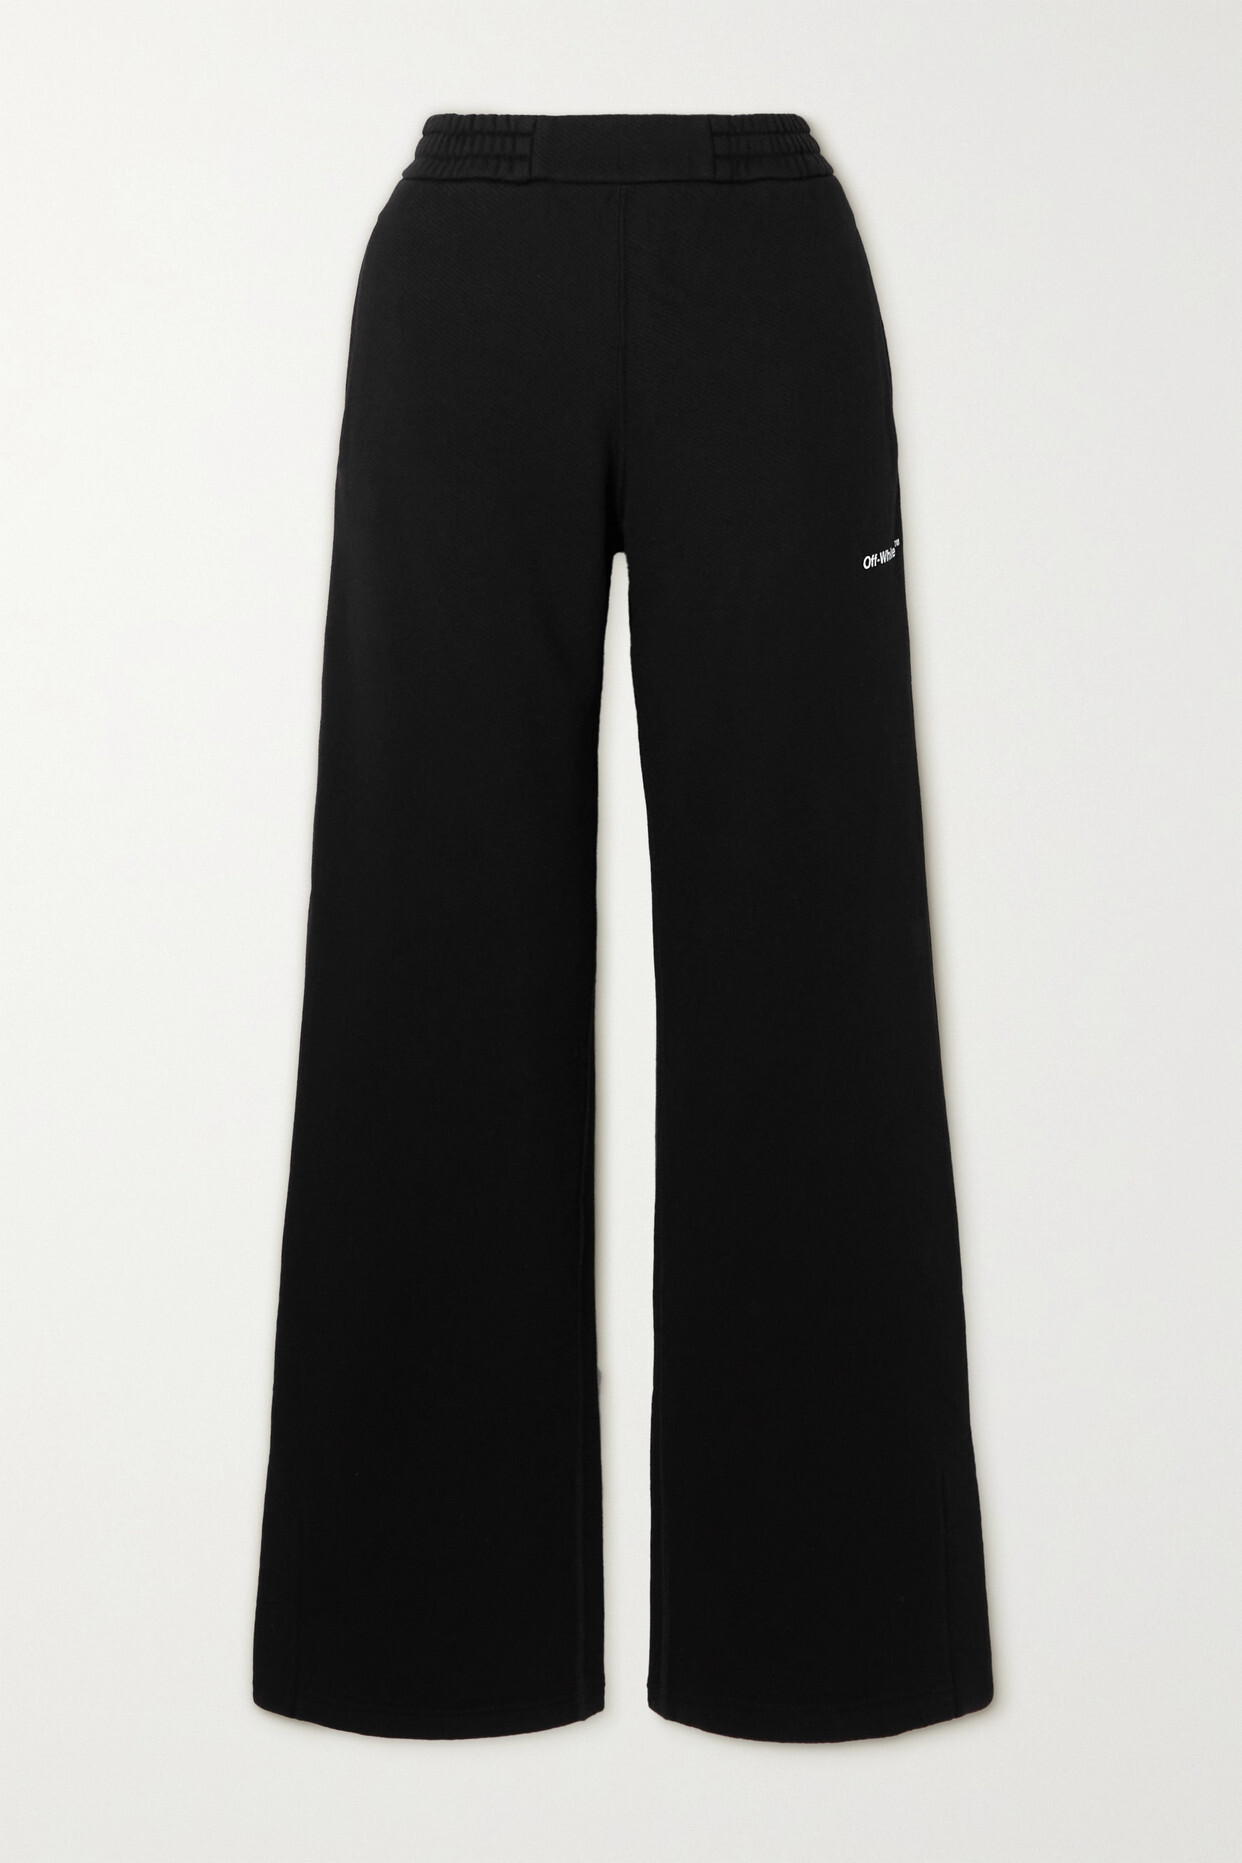 Off-White - Printed Cotton-jersey Sweatpants - Black